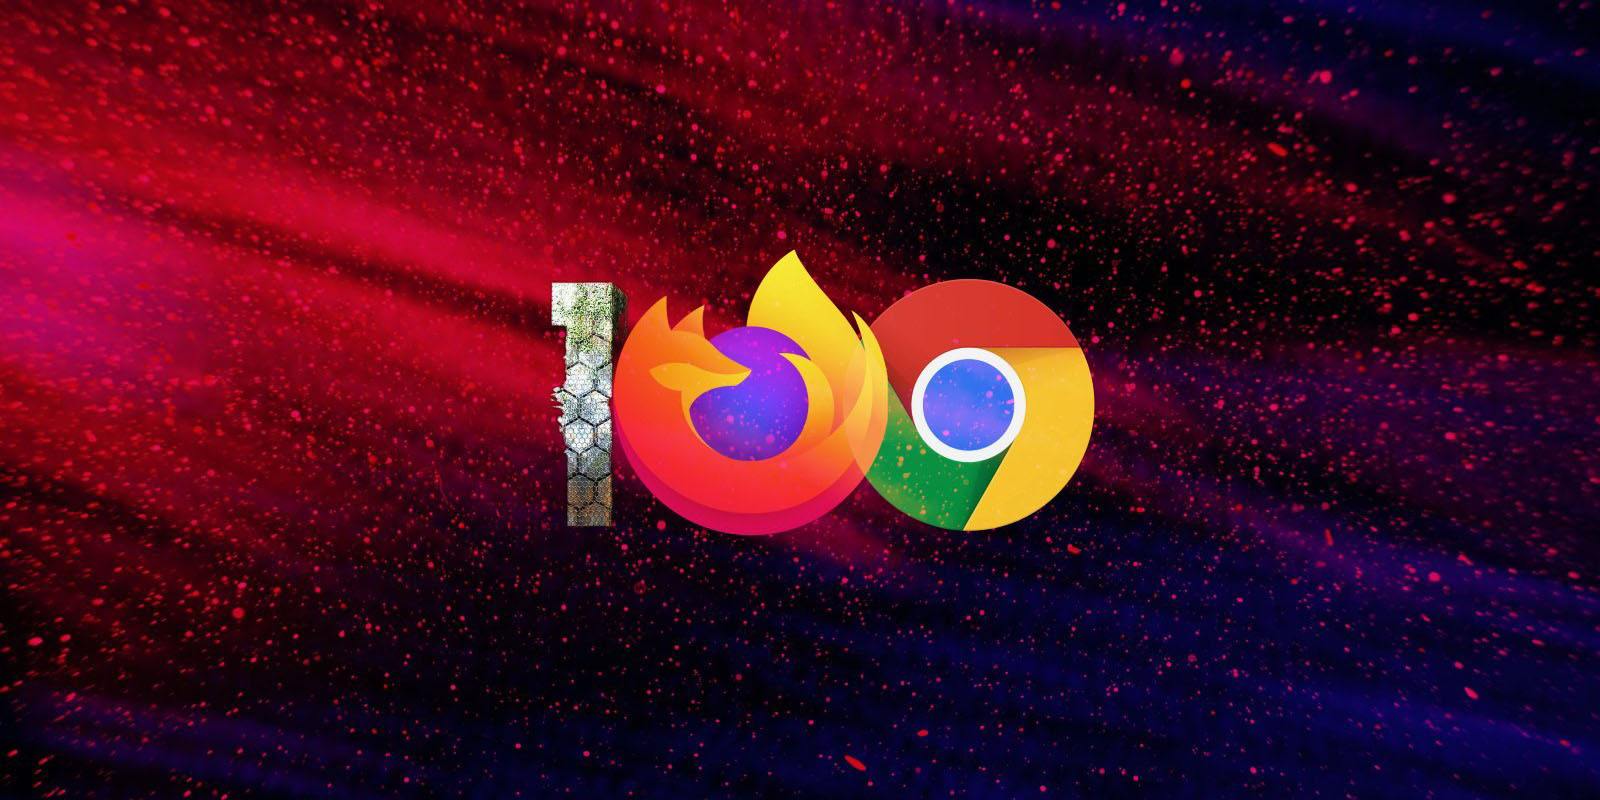 Chrome may break some websites